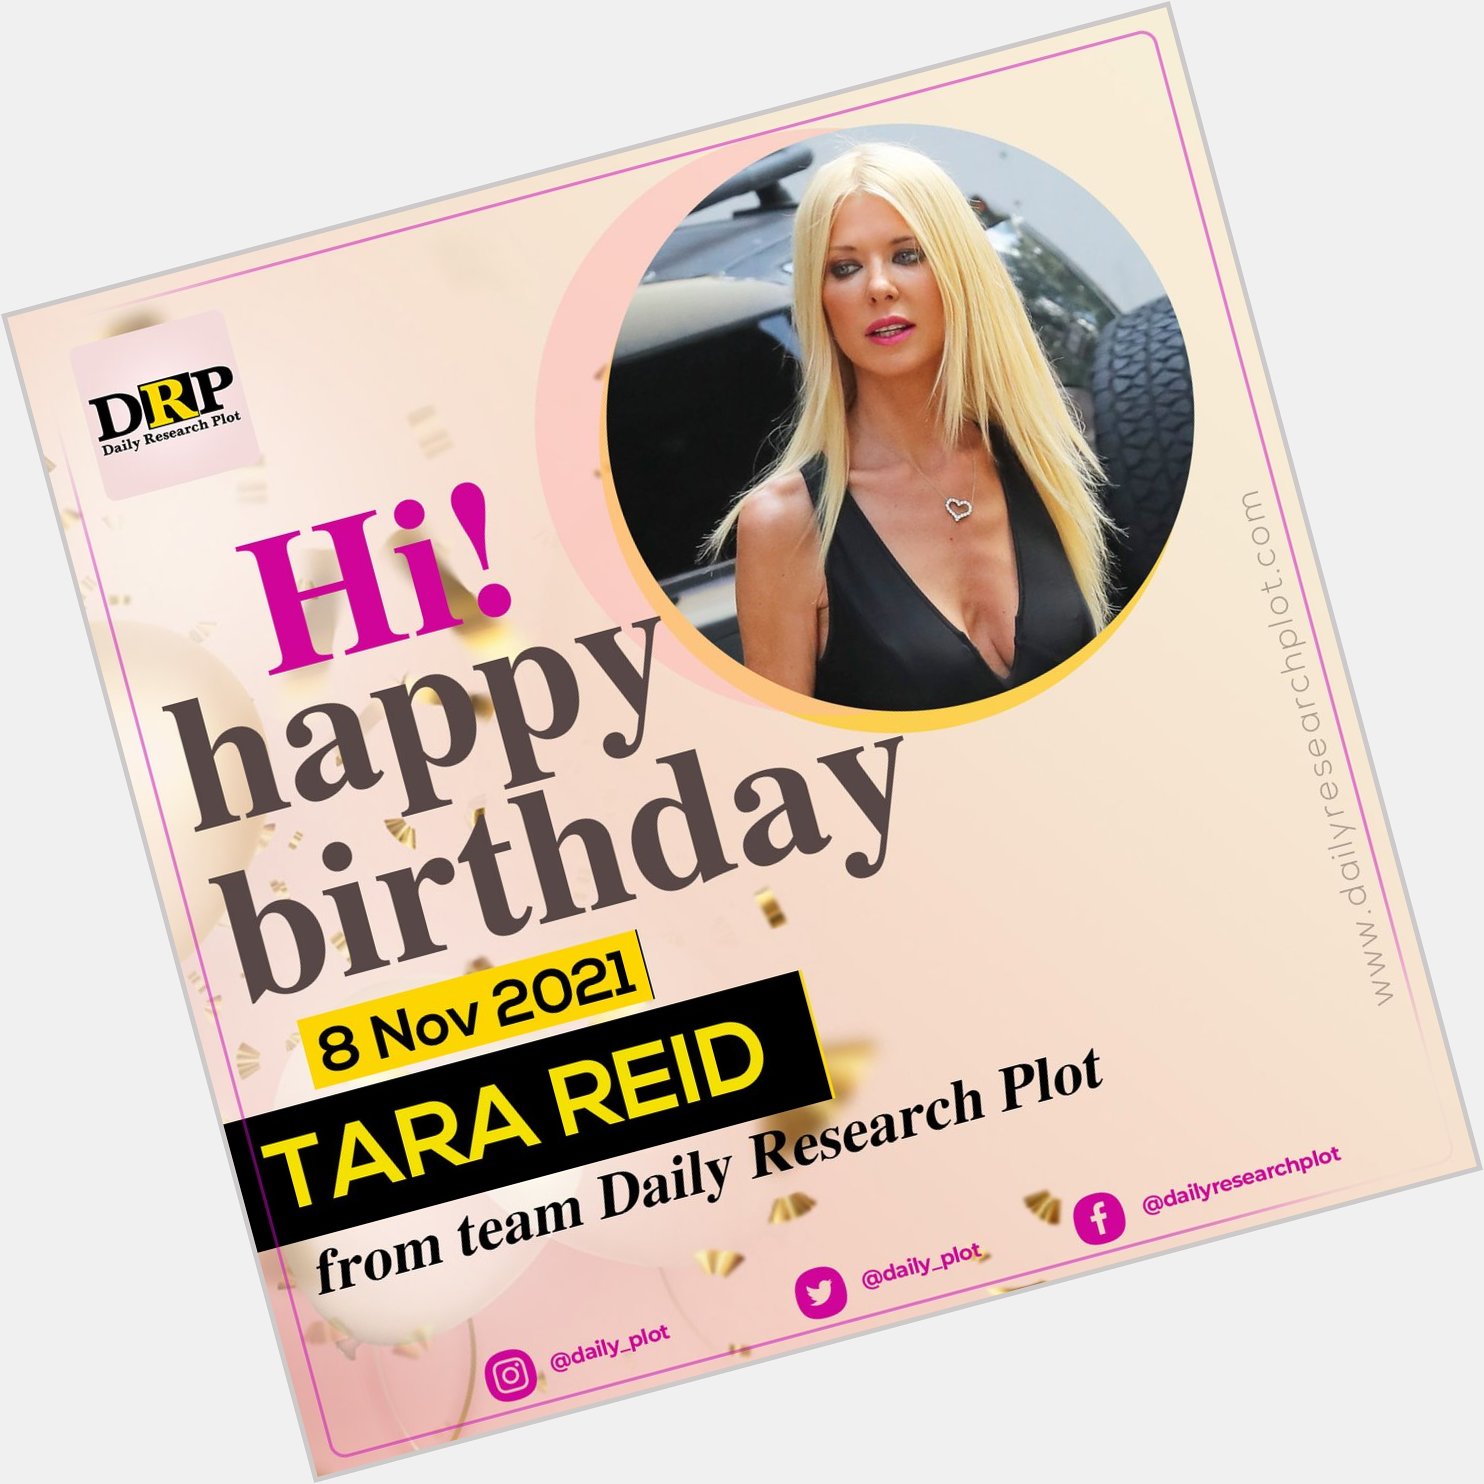 Happy Birthday!
Tara Reid   